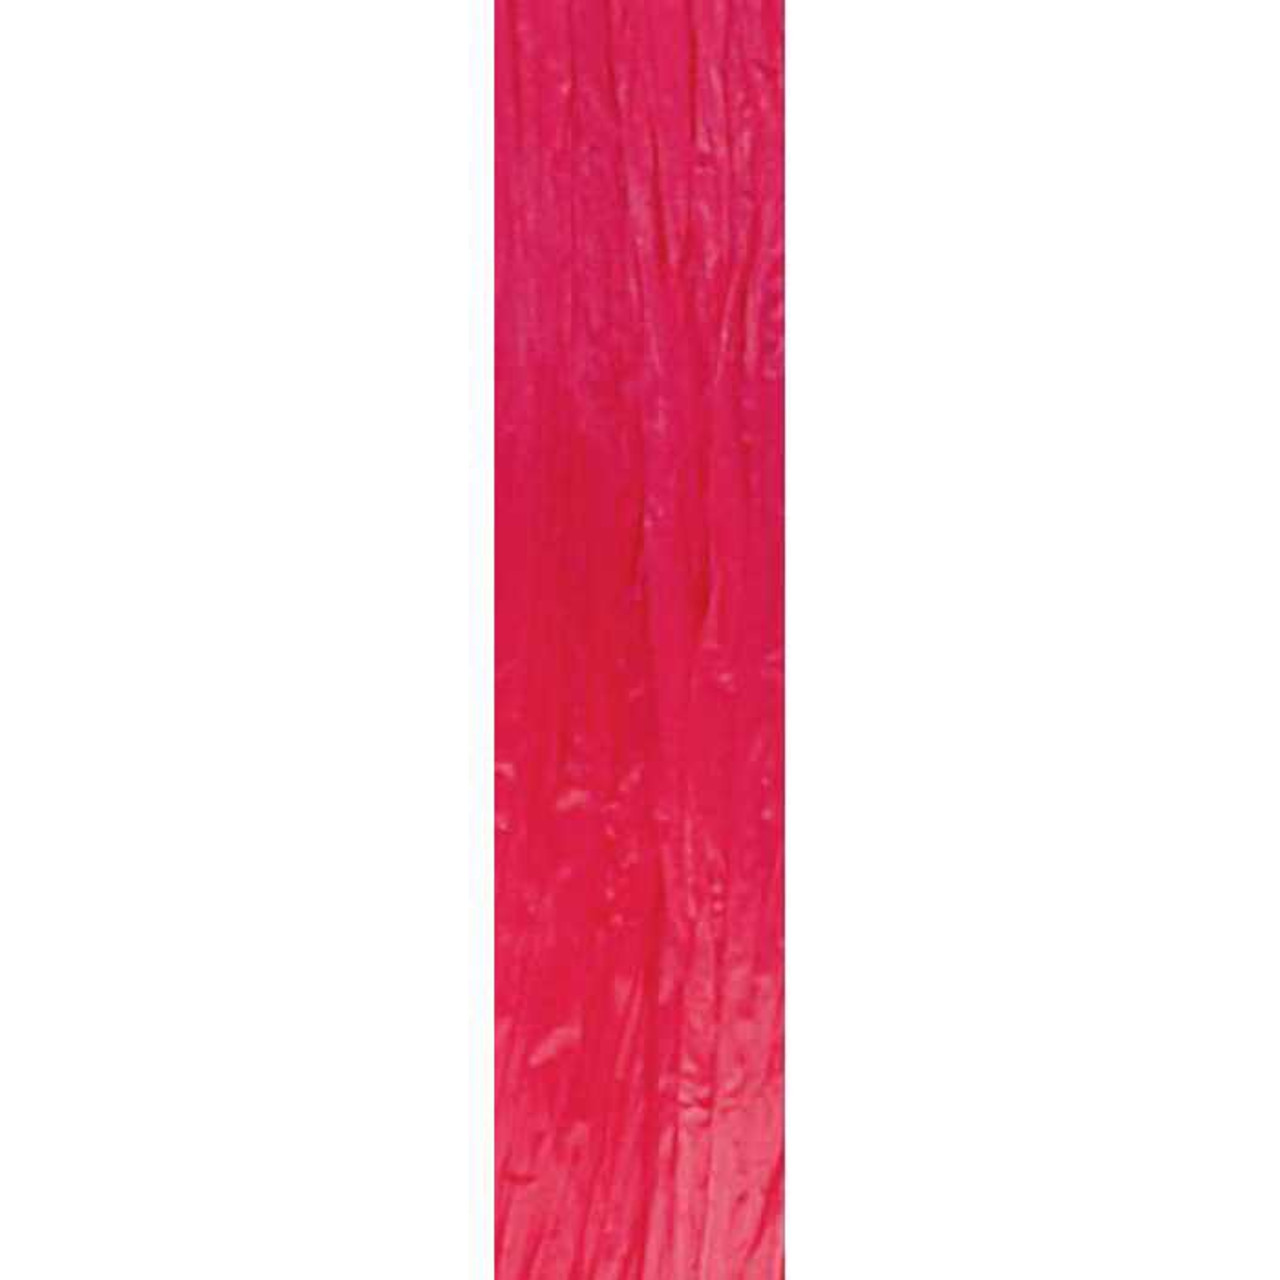 *Berwick Red Raspberry Wraphia Ribbon 100 yds/spool